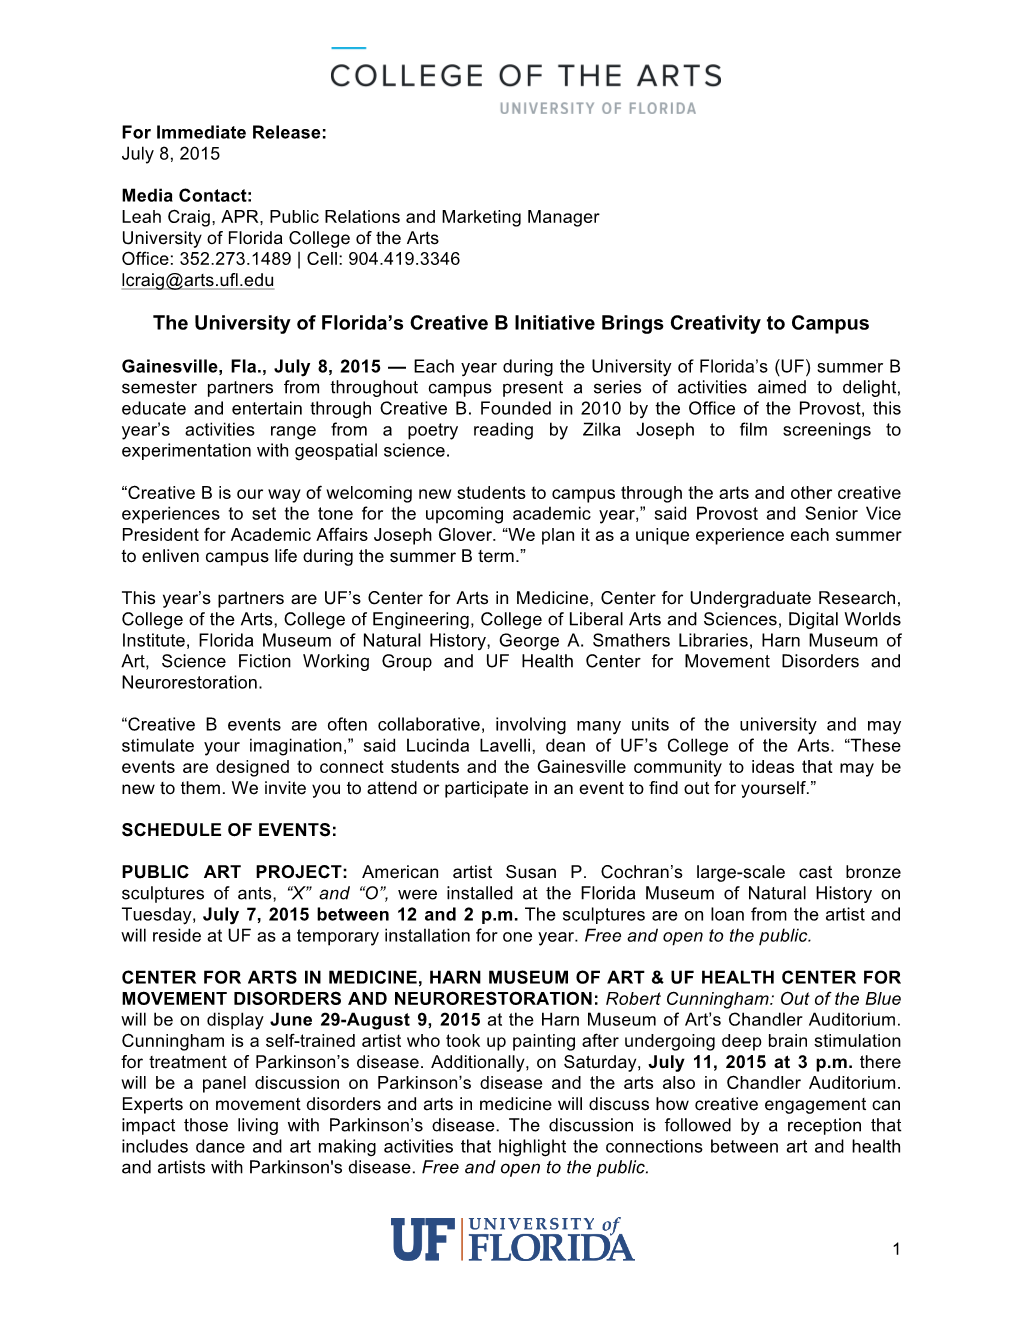 PDF of Press Release